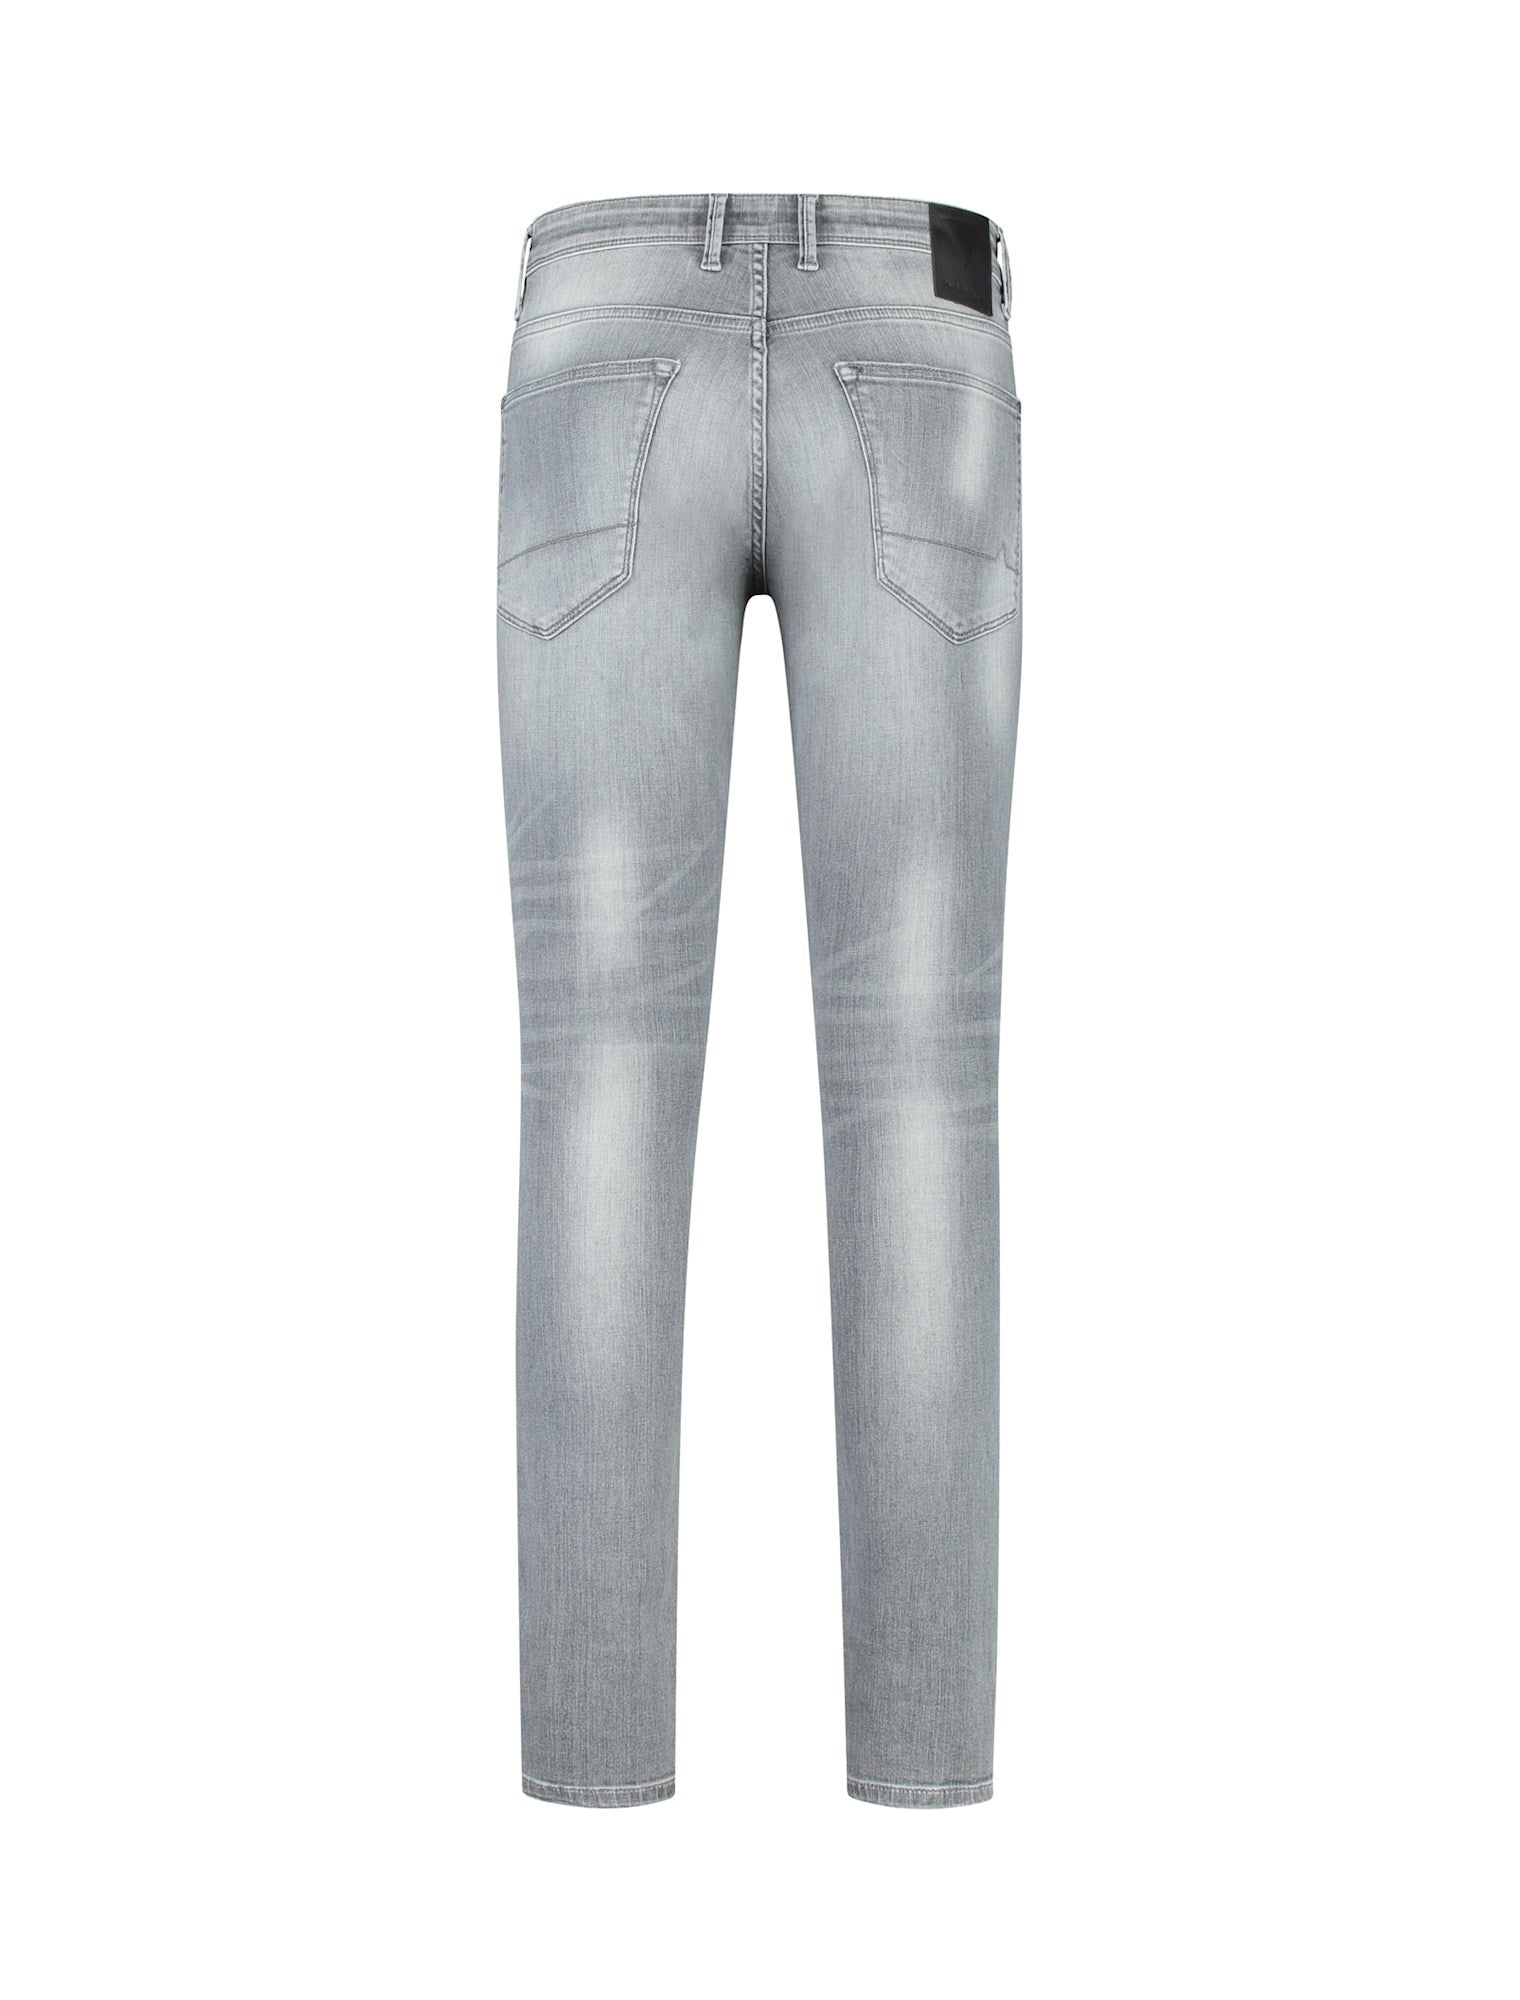 Purewhite Jeans The Jone W0112